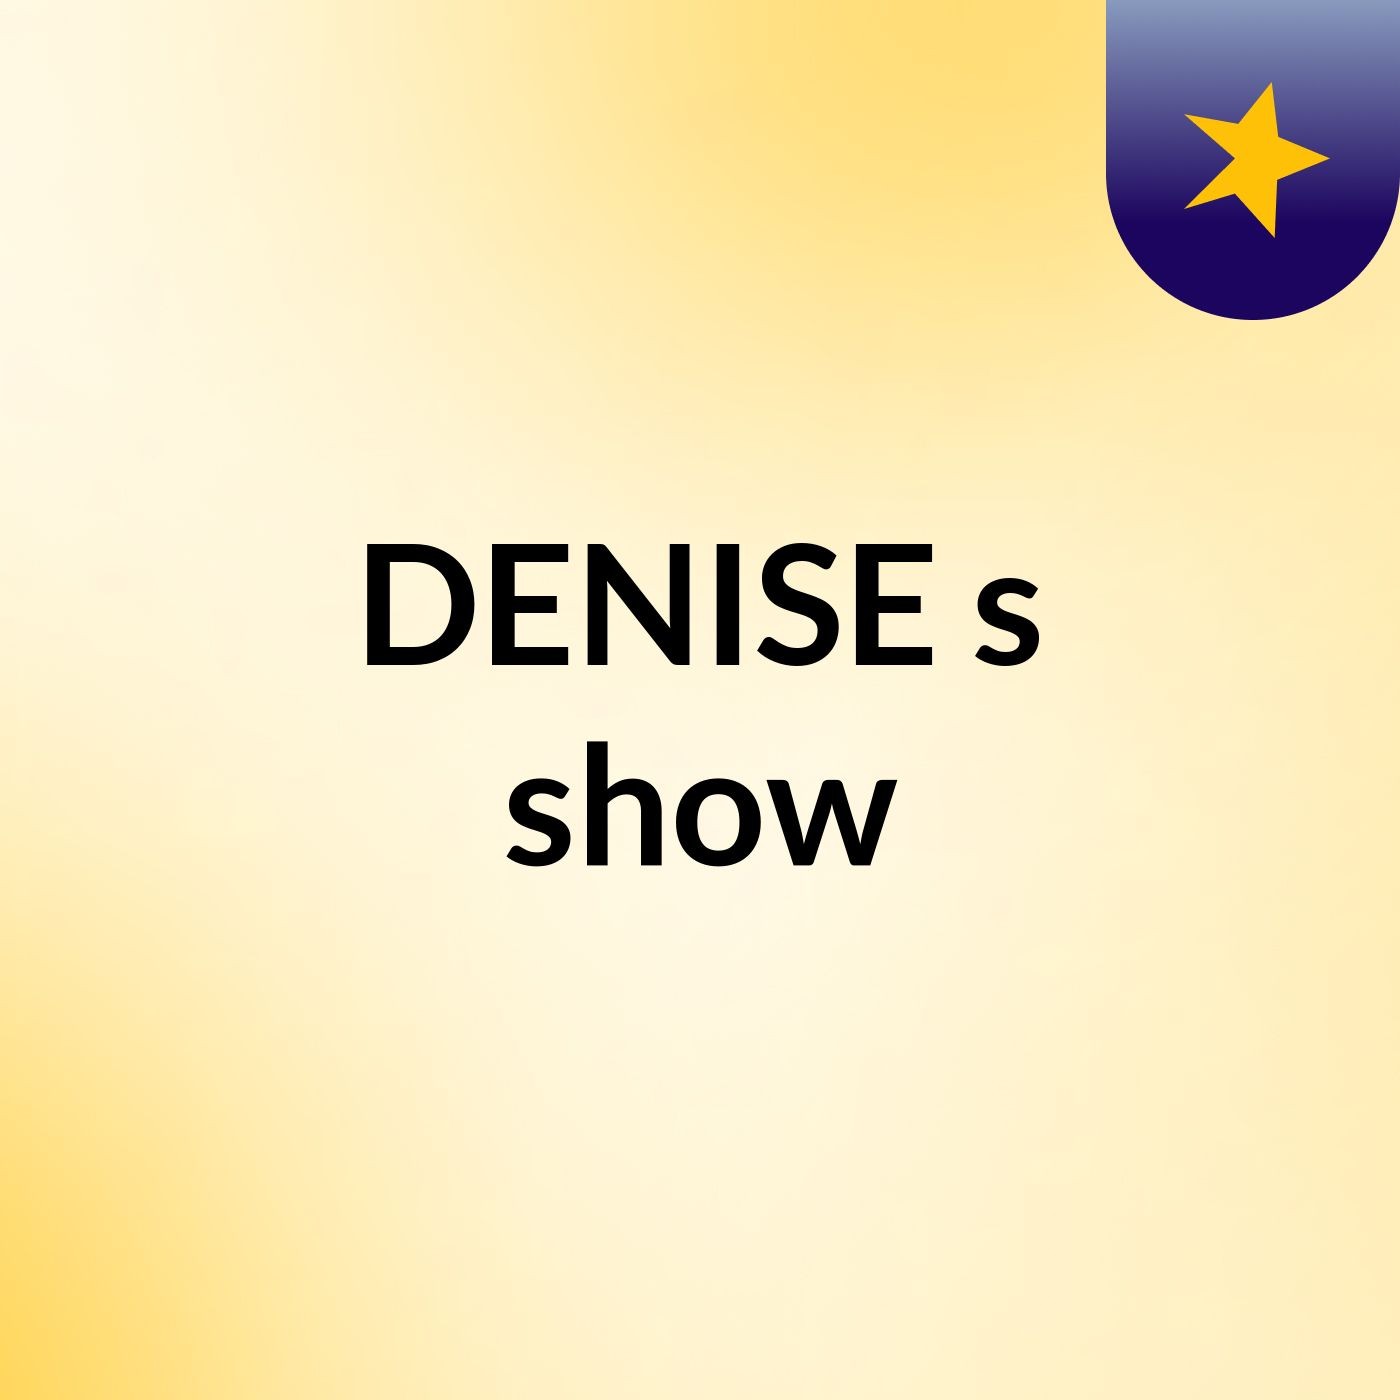 DENISE's show